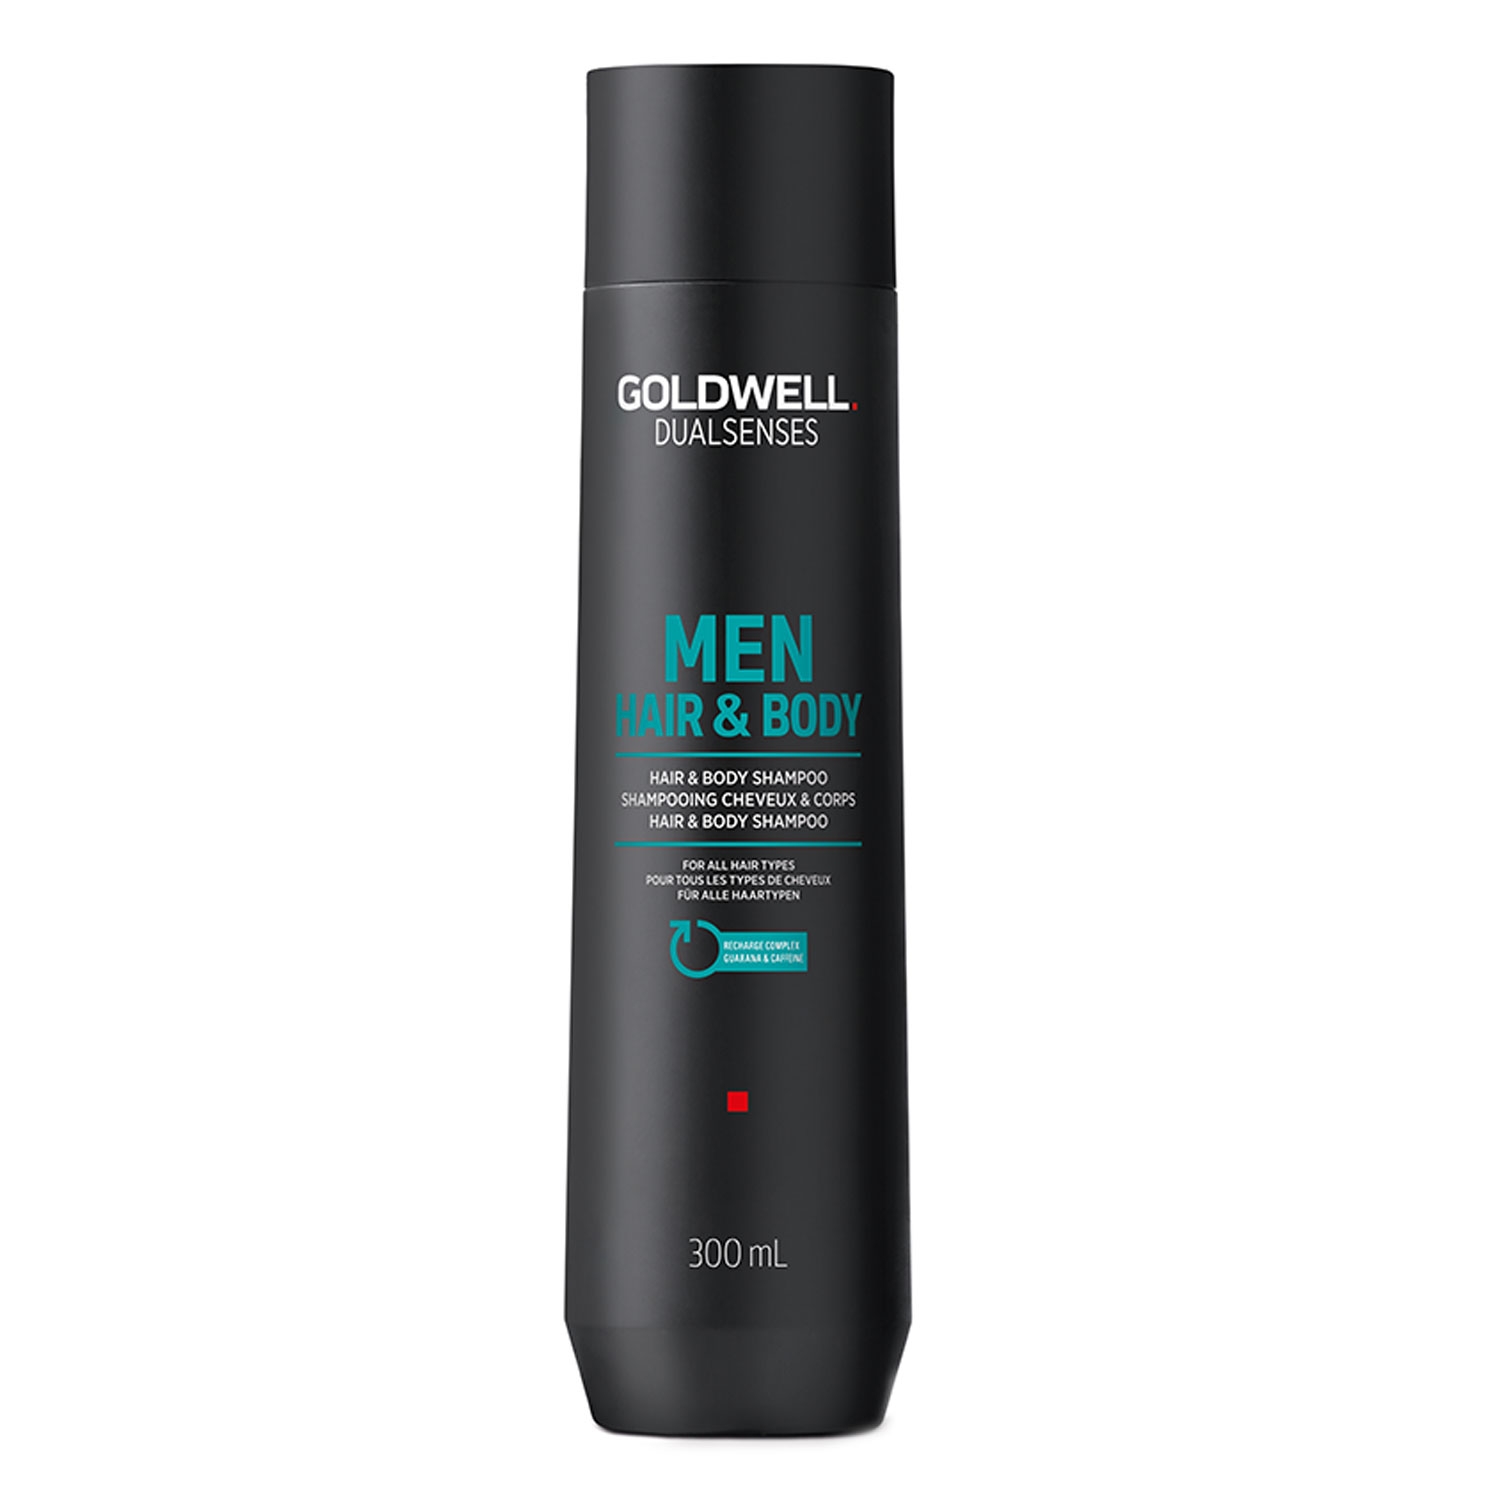 Produktbild von Dualsenses For Men - Hair & Body Shampoo